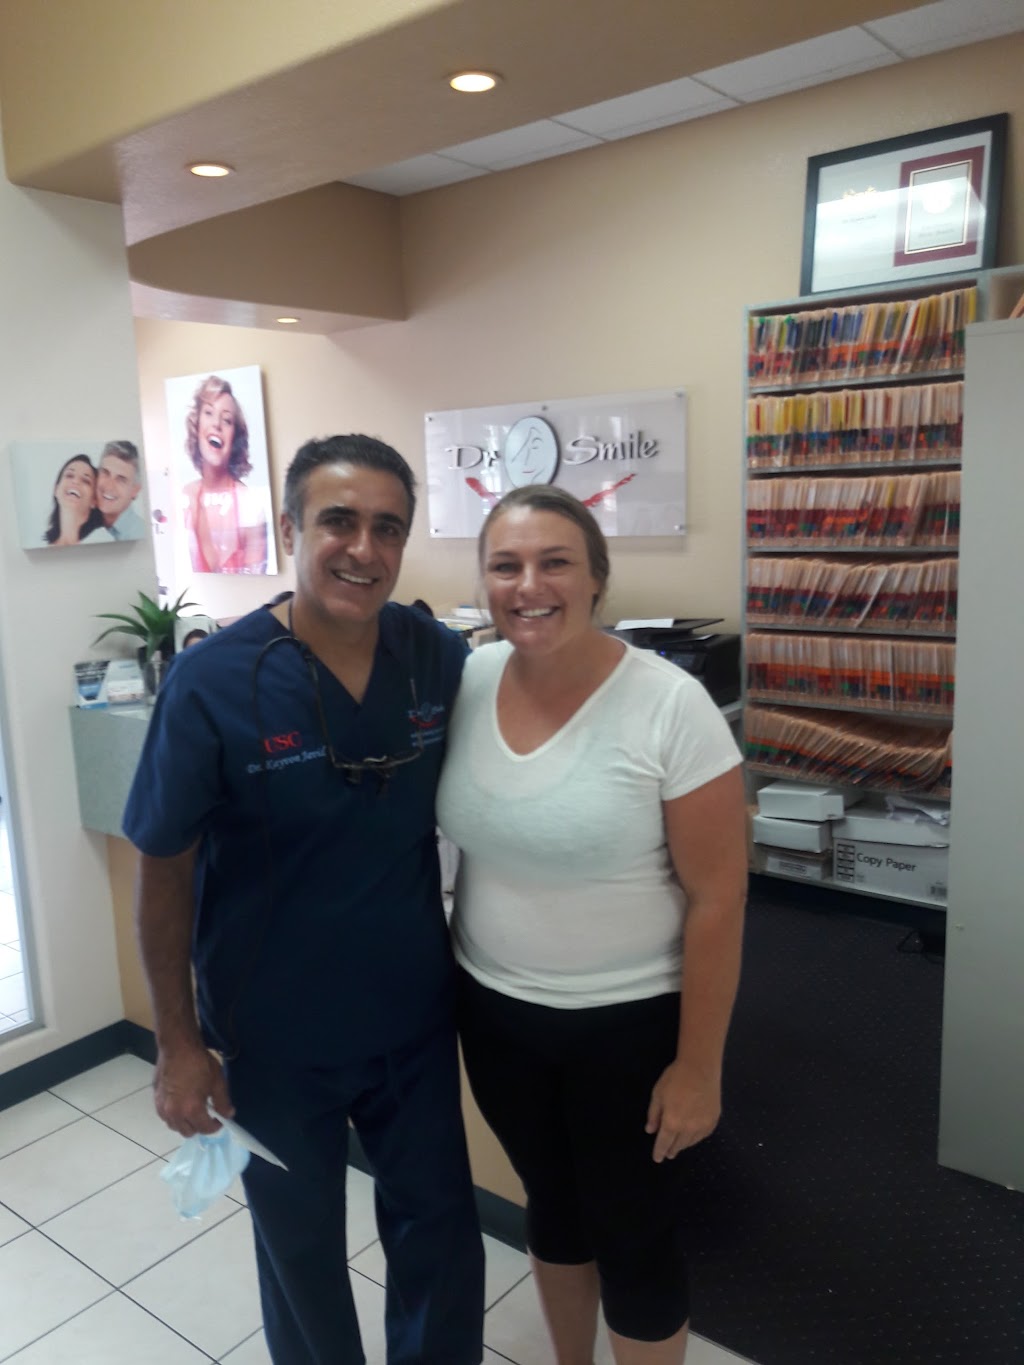 Dr. Smile San Pedro | Dentist in San Pedro - dentist  | Photo 7 of 7 | Address: 1622 S Gaffey St, San Pedro, CA 90731, USA | Phone: (310) 548-8128